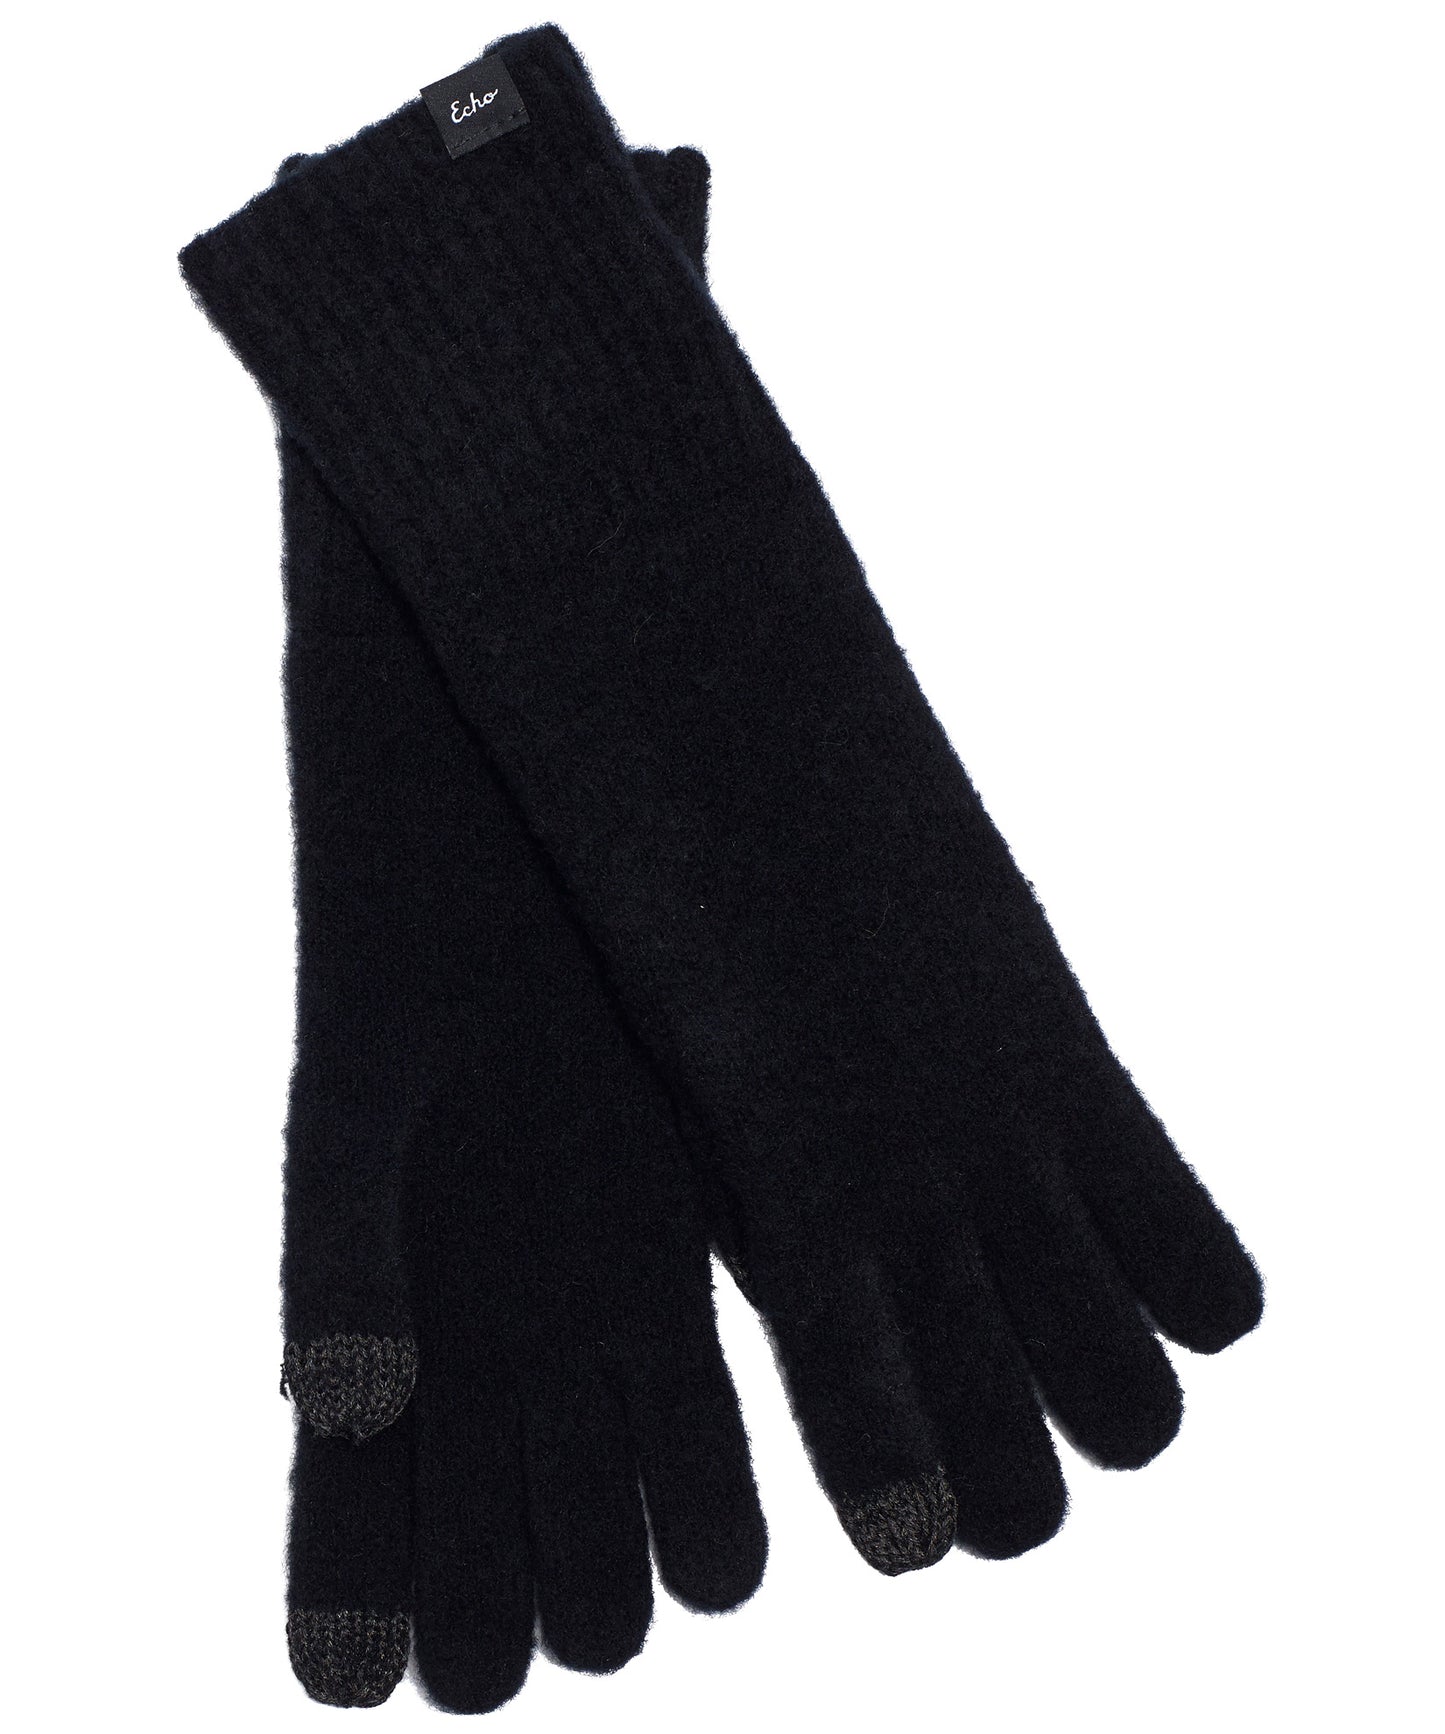 Rib Cuff Glove in color Echo Black